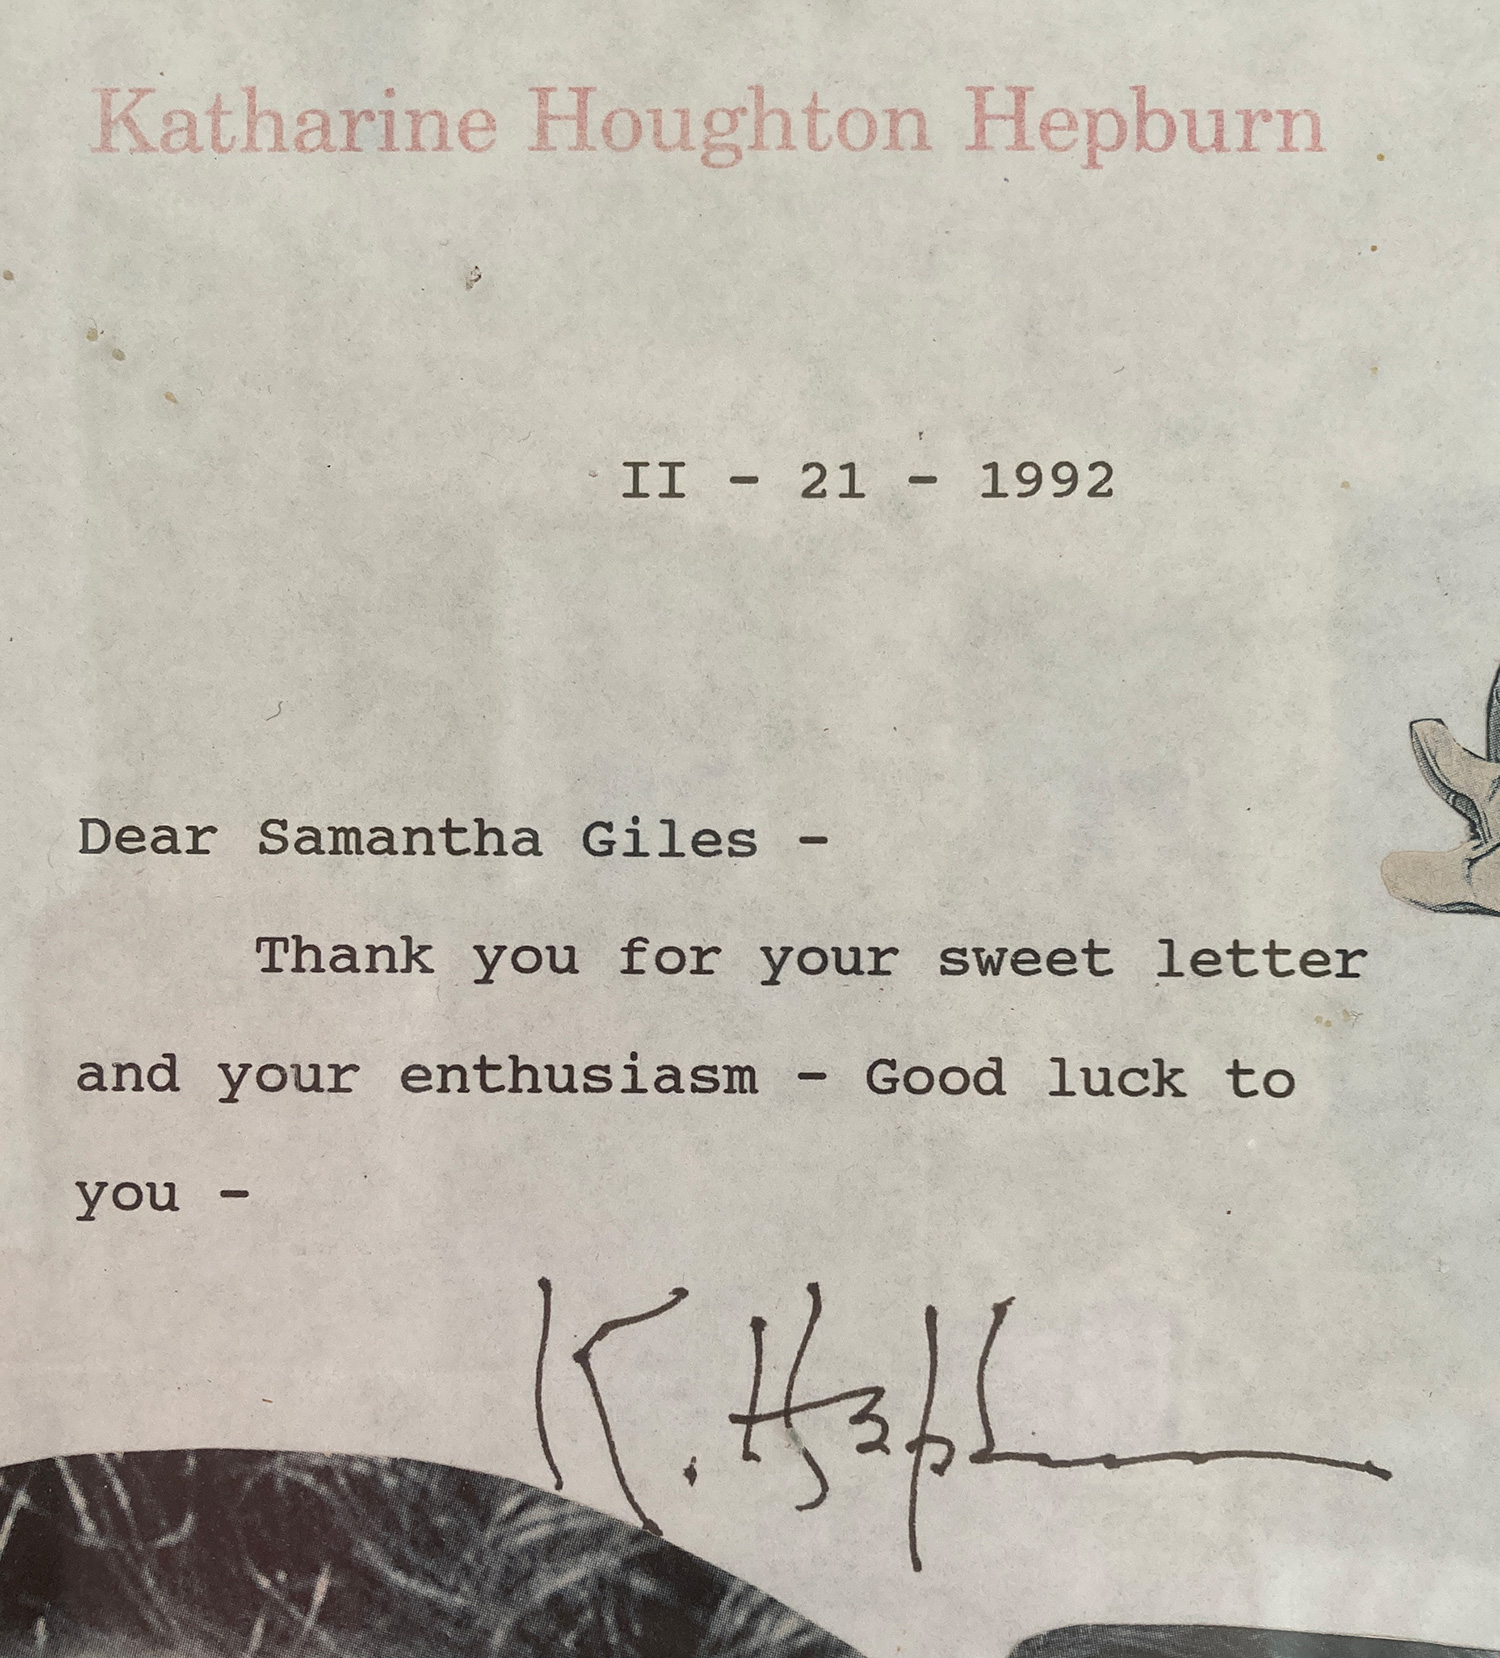 Katherine Hepburn letter